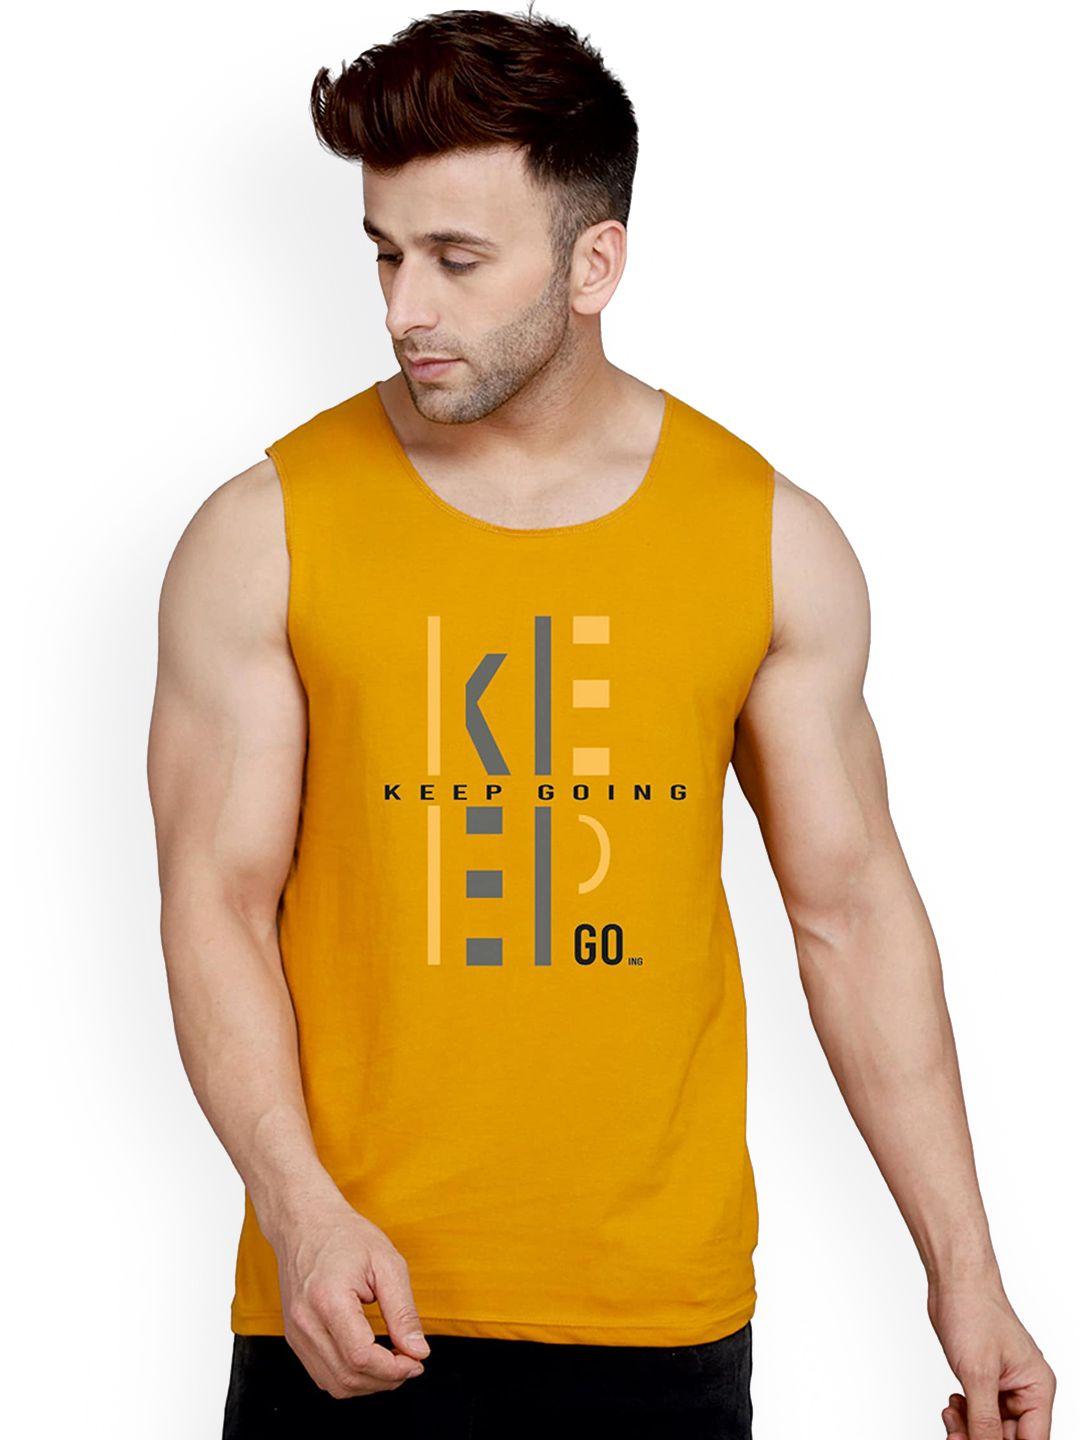 slowloris printed cotton breathable gym vests sl26 keep mustard